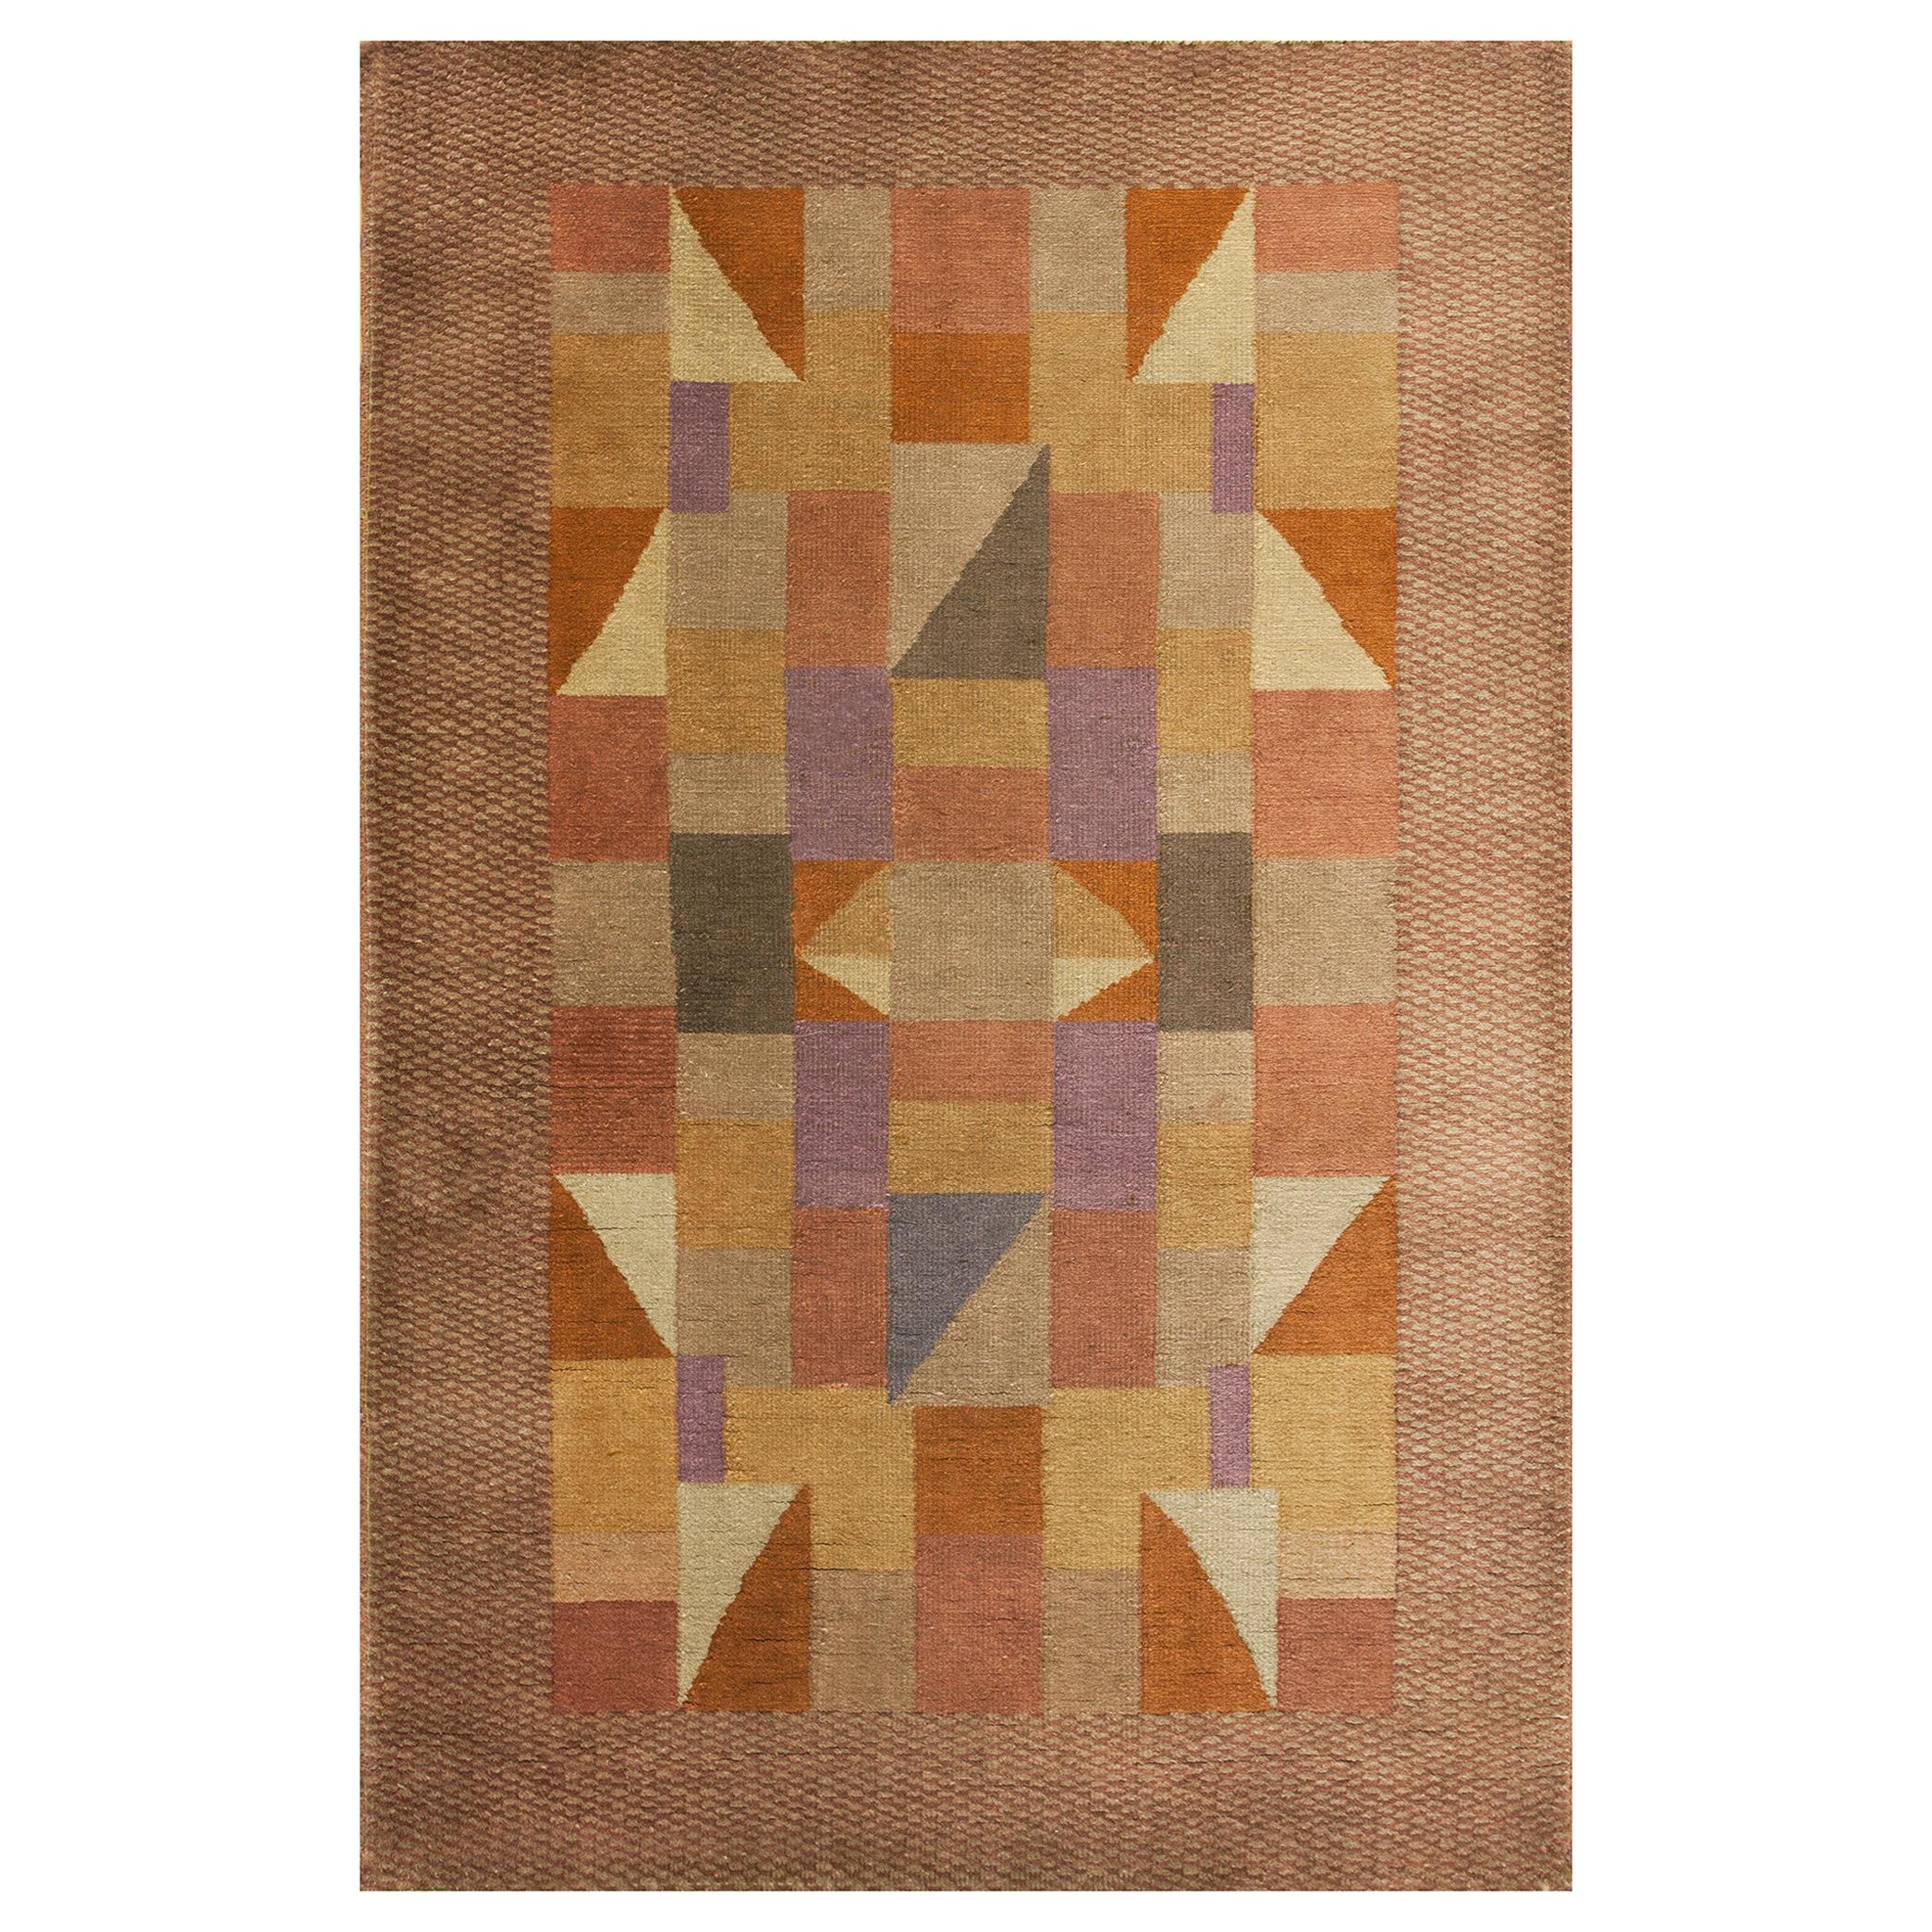 1920s Chinese Art Deco Carpet ( 3' x 4' 8" - 92 x 142 cm )